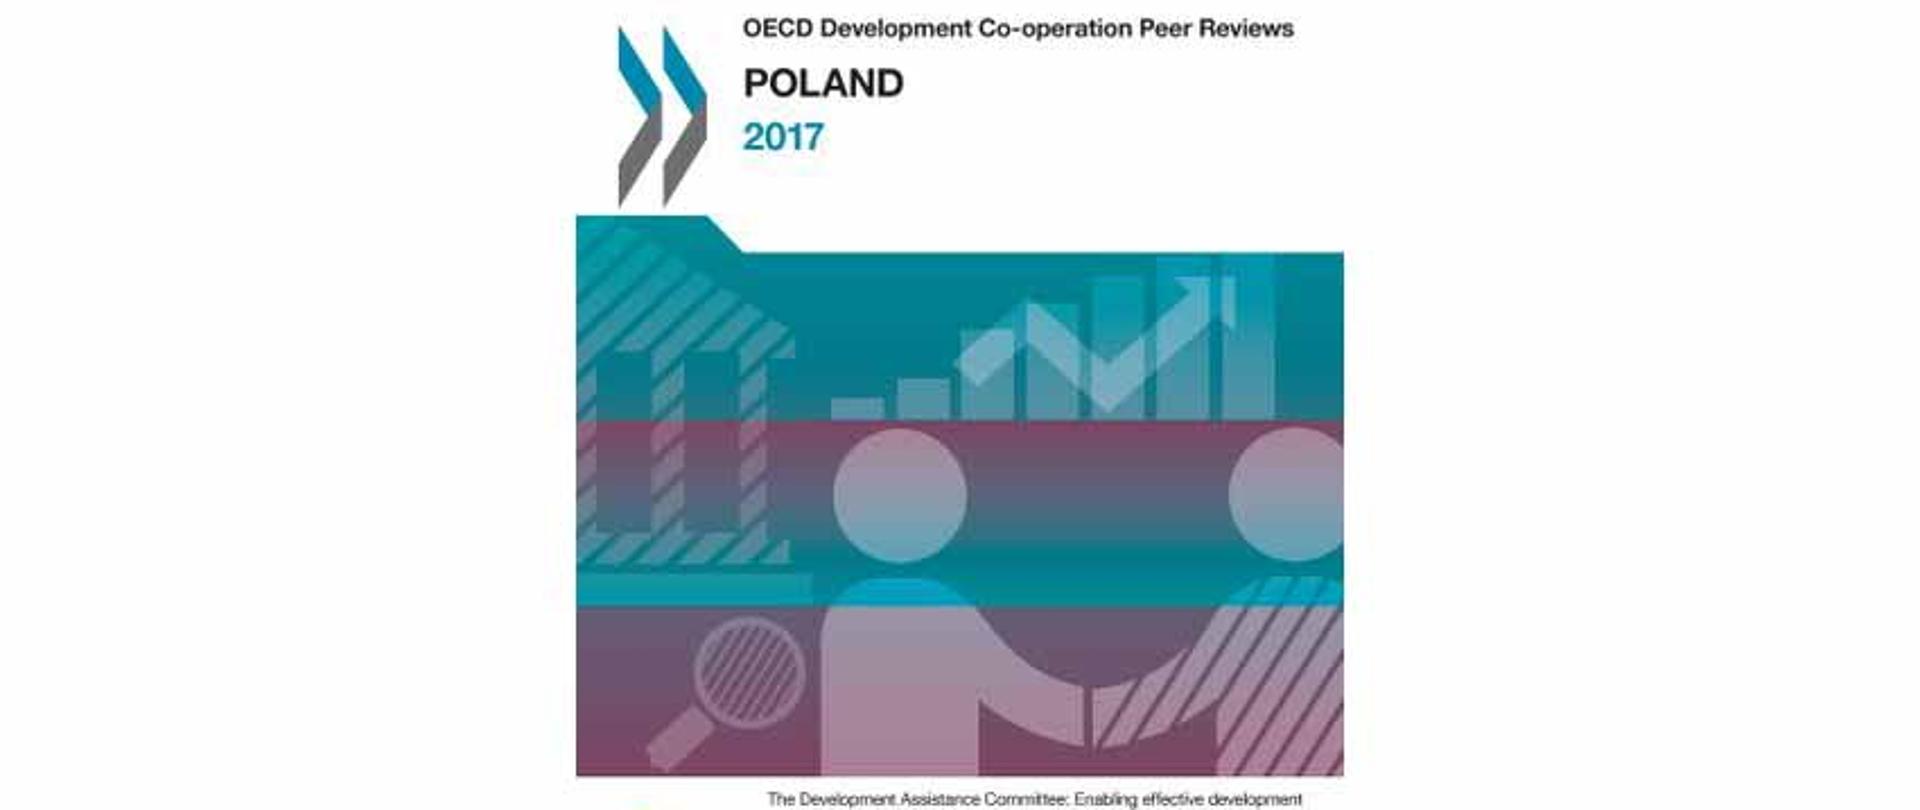 OECD DEVELOPMENT CO-OPERATION PEER REVIEWS POLAND 2017